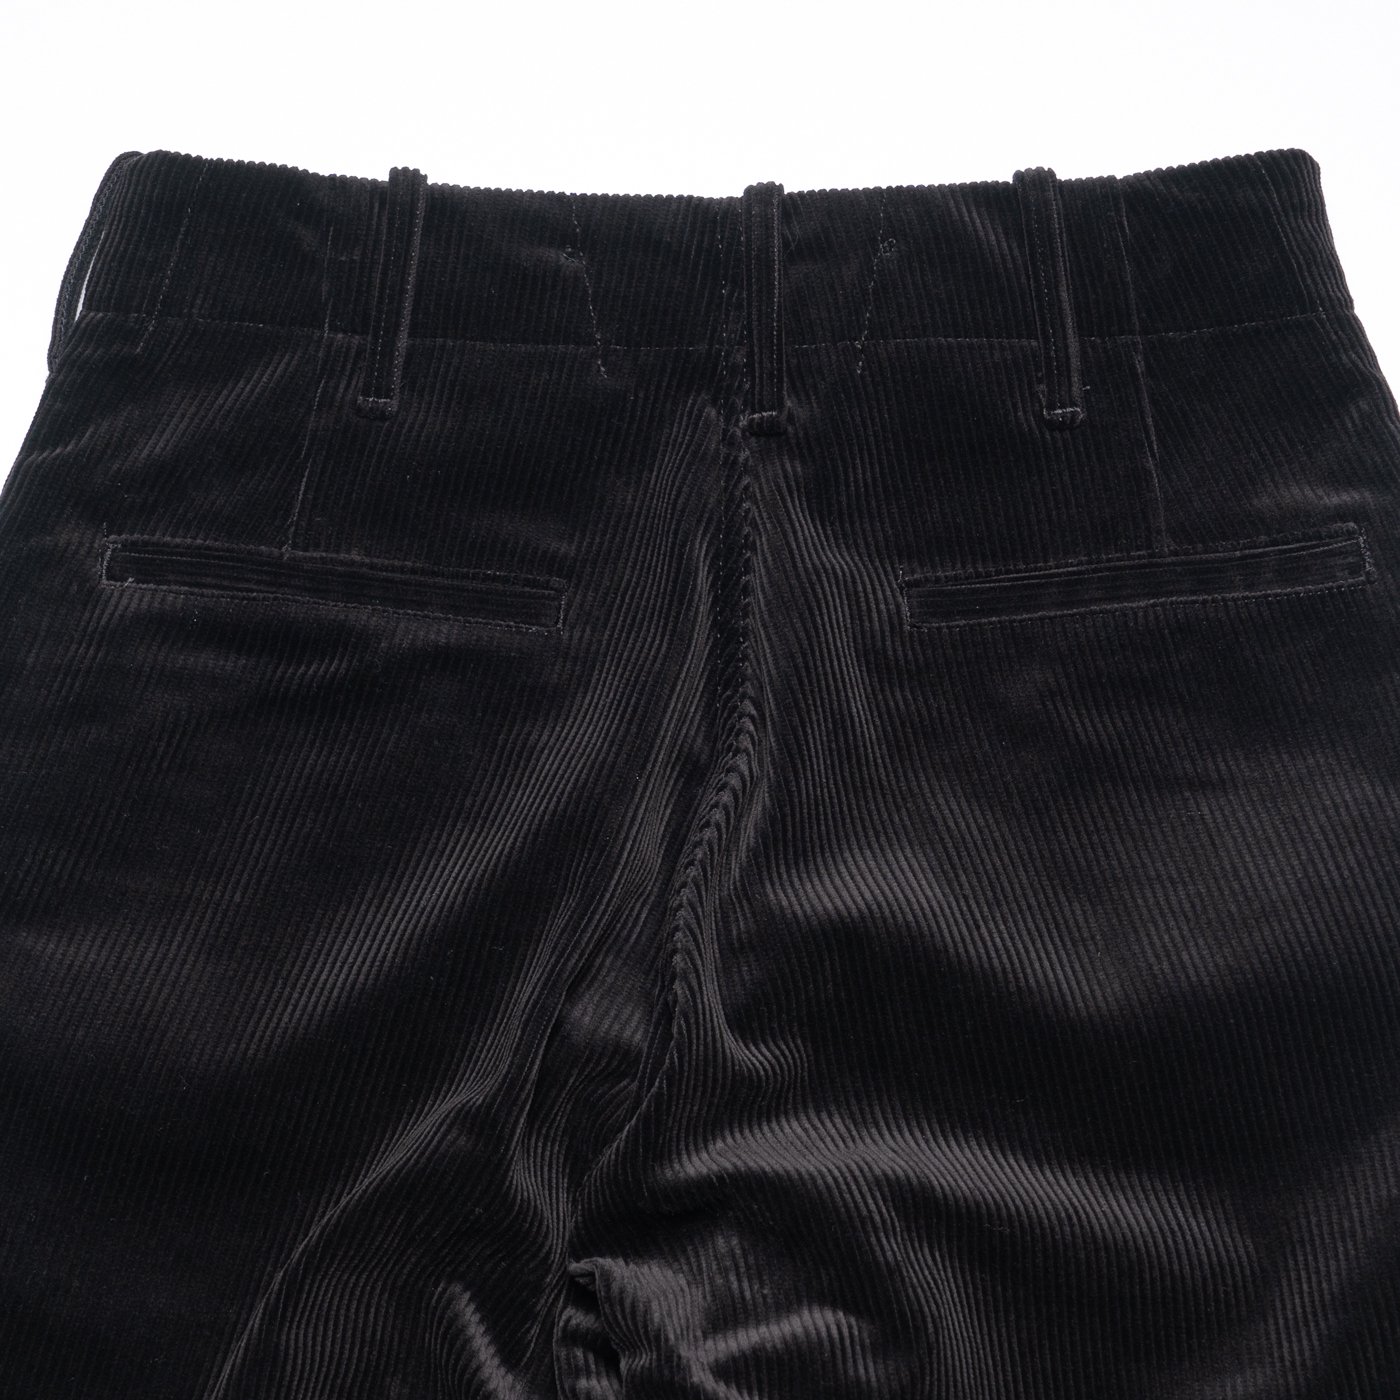 TUKI * 0168 Short Short Wide Trousers 8 Wale Corduroy * Black | public